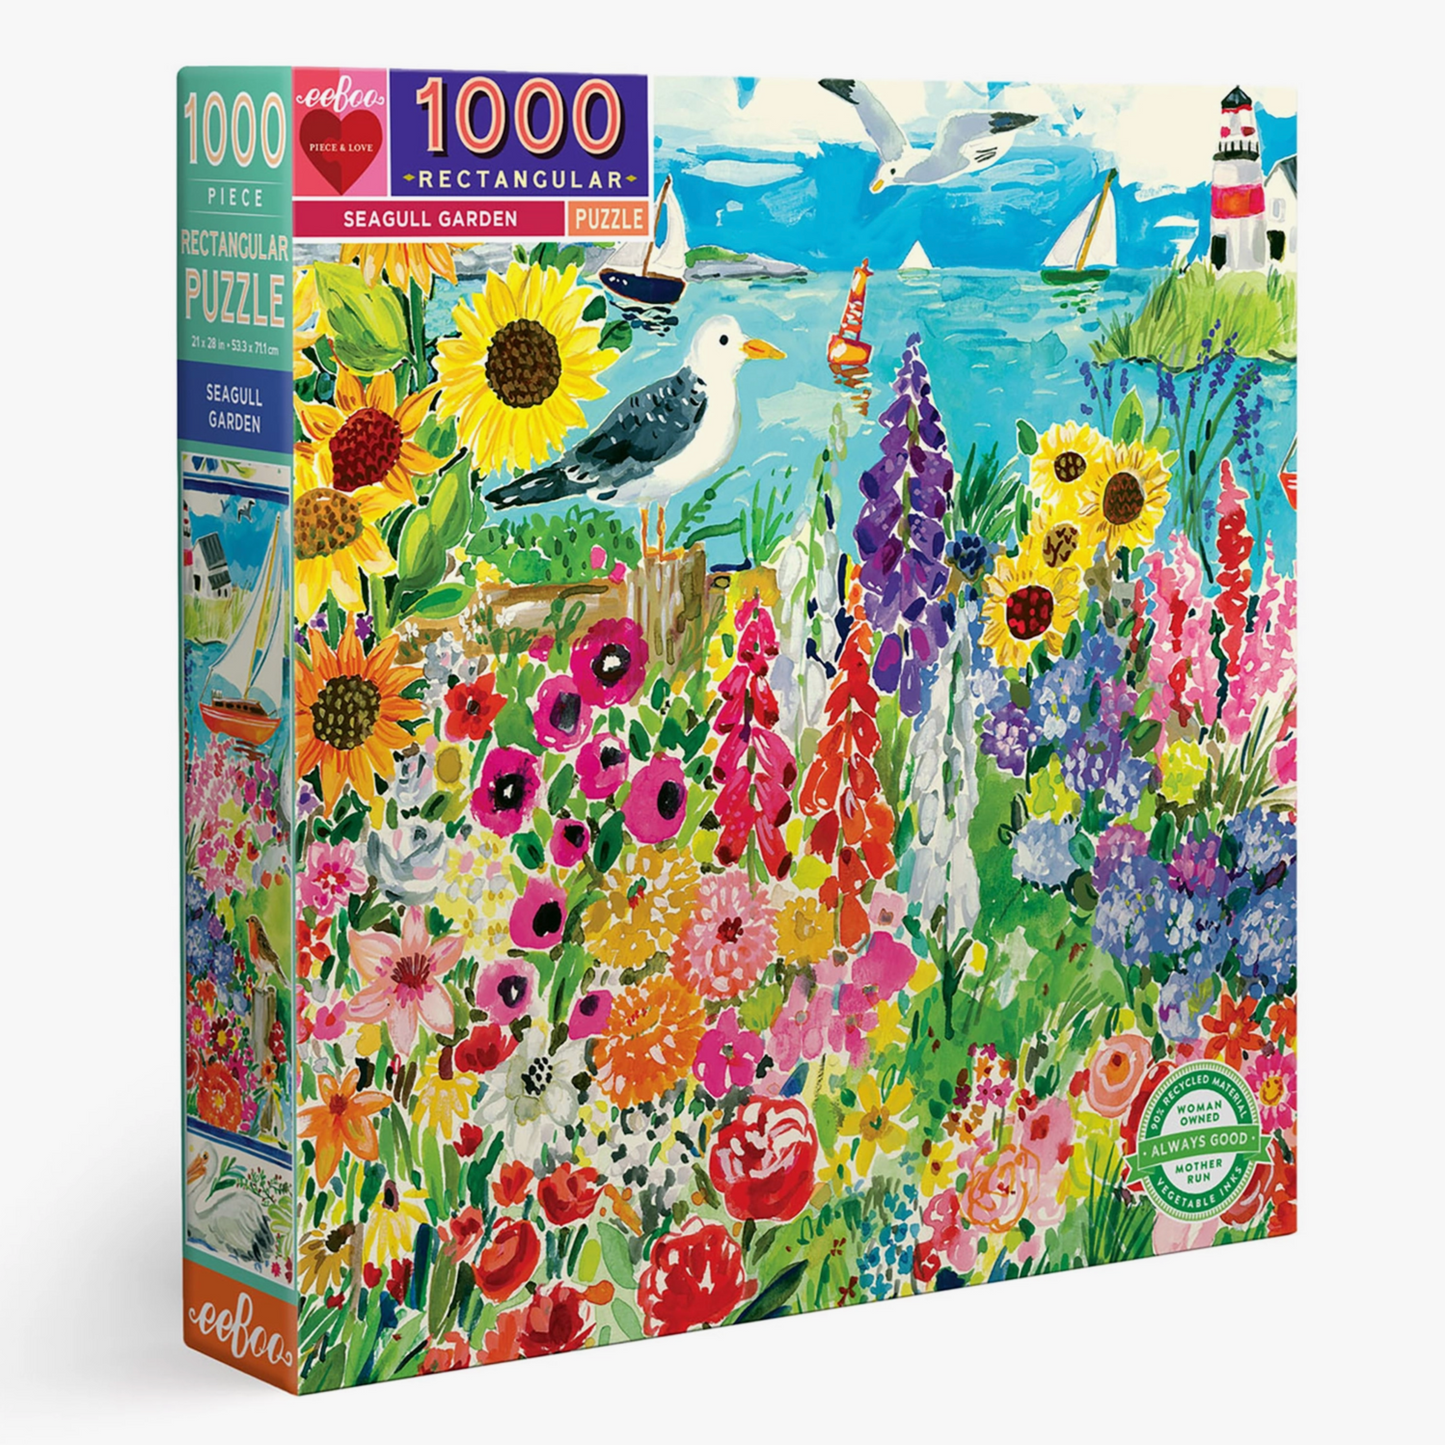 Seagull Garden 1000pc Puzzle